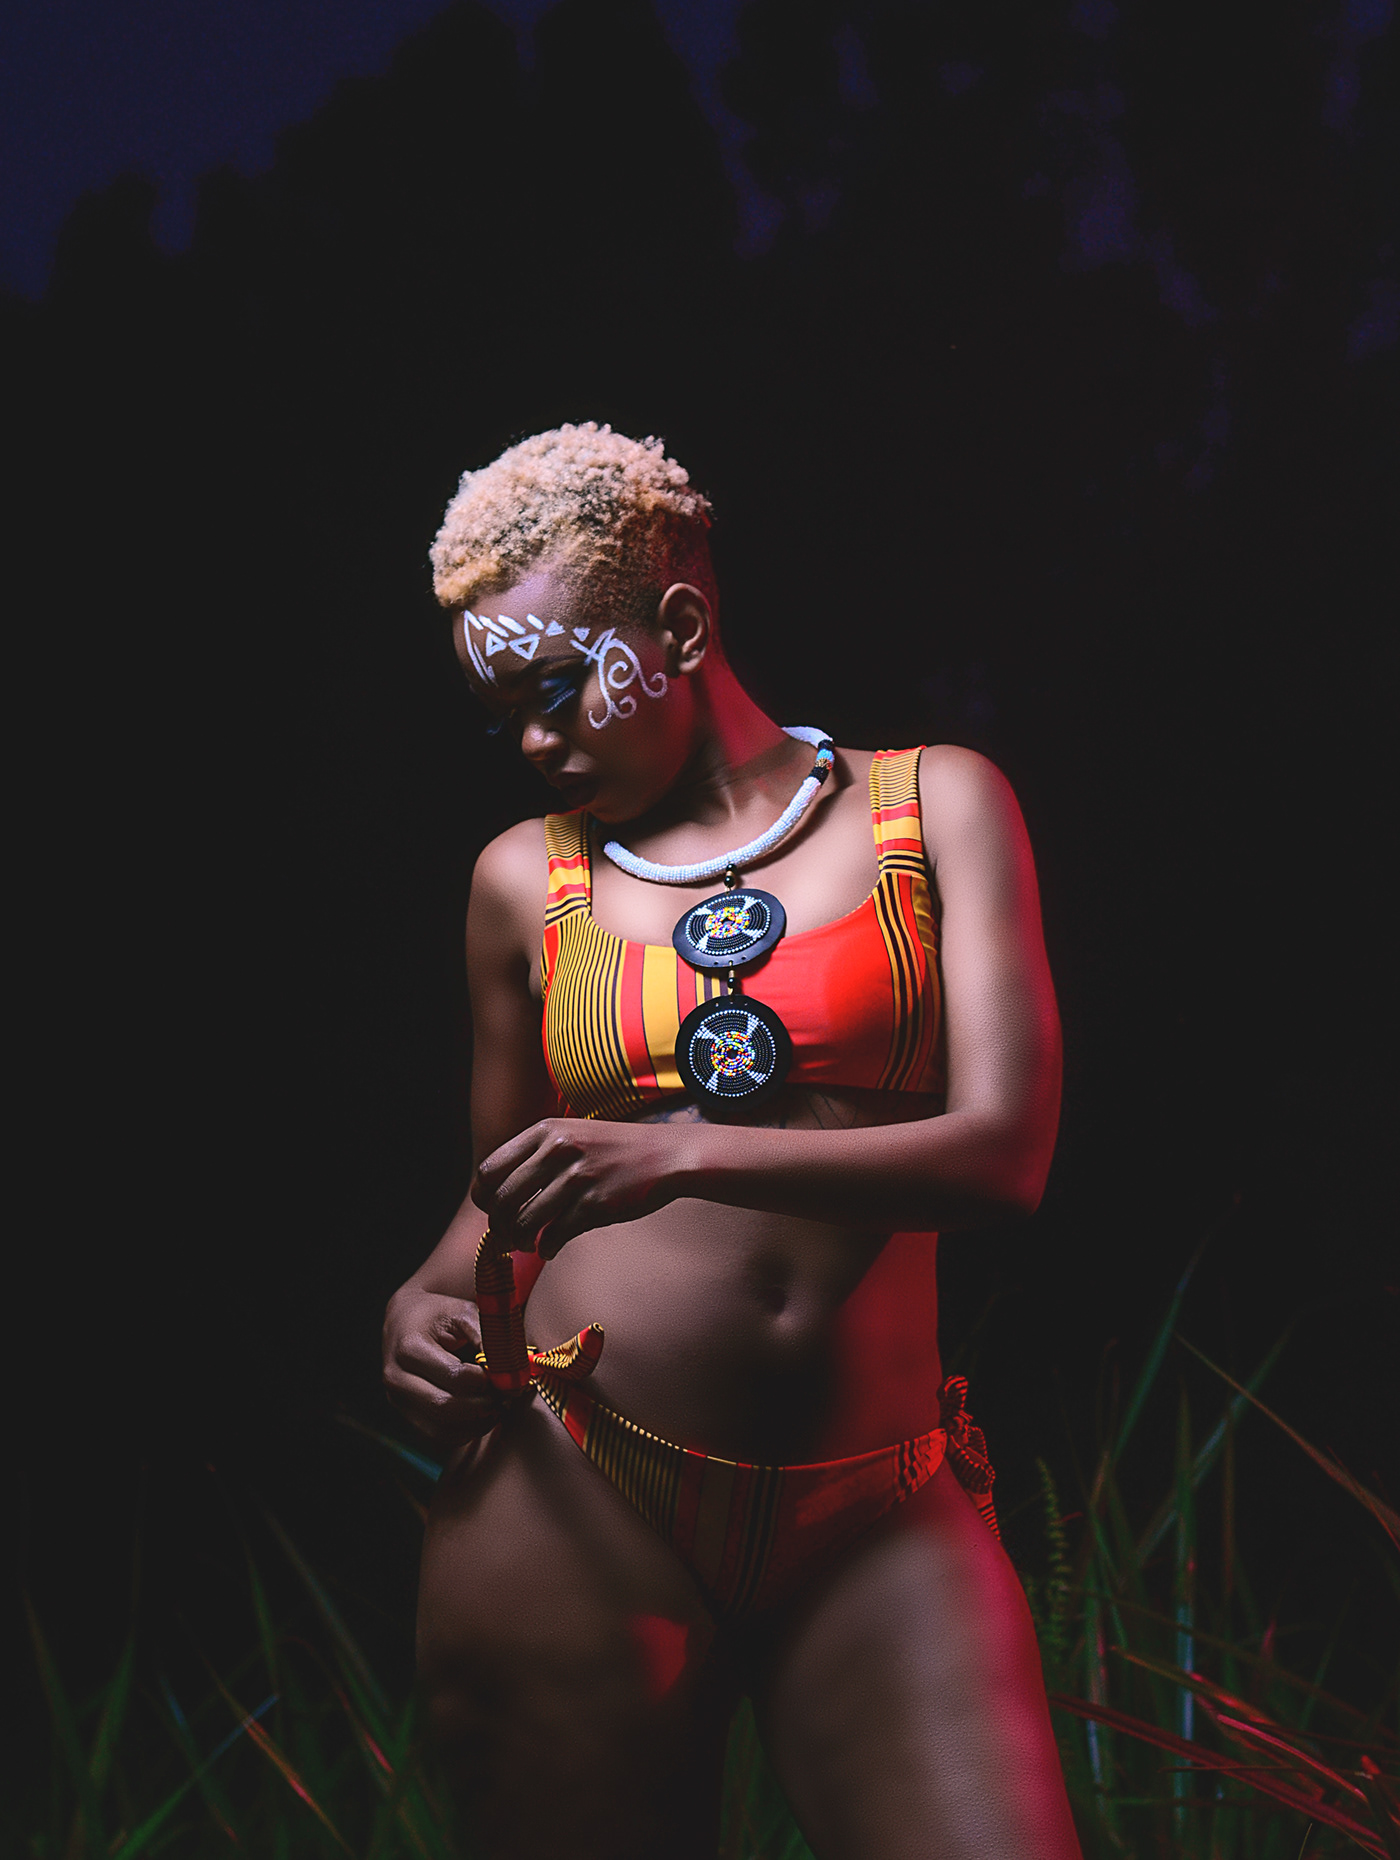 editorial swimwear Swimsuits models goldenhour designers bikini wakanda africanprint dashiki